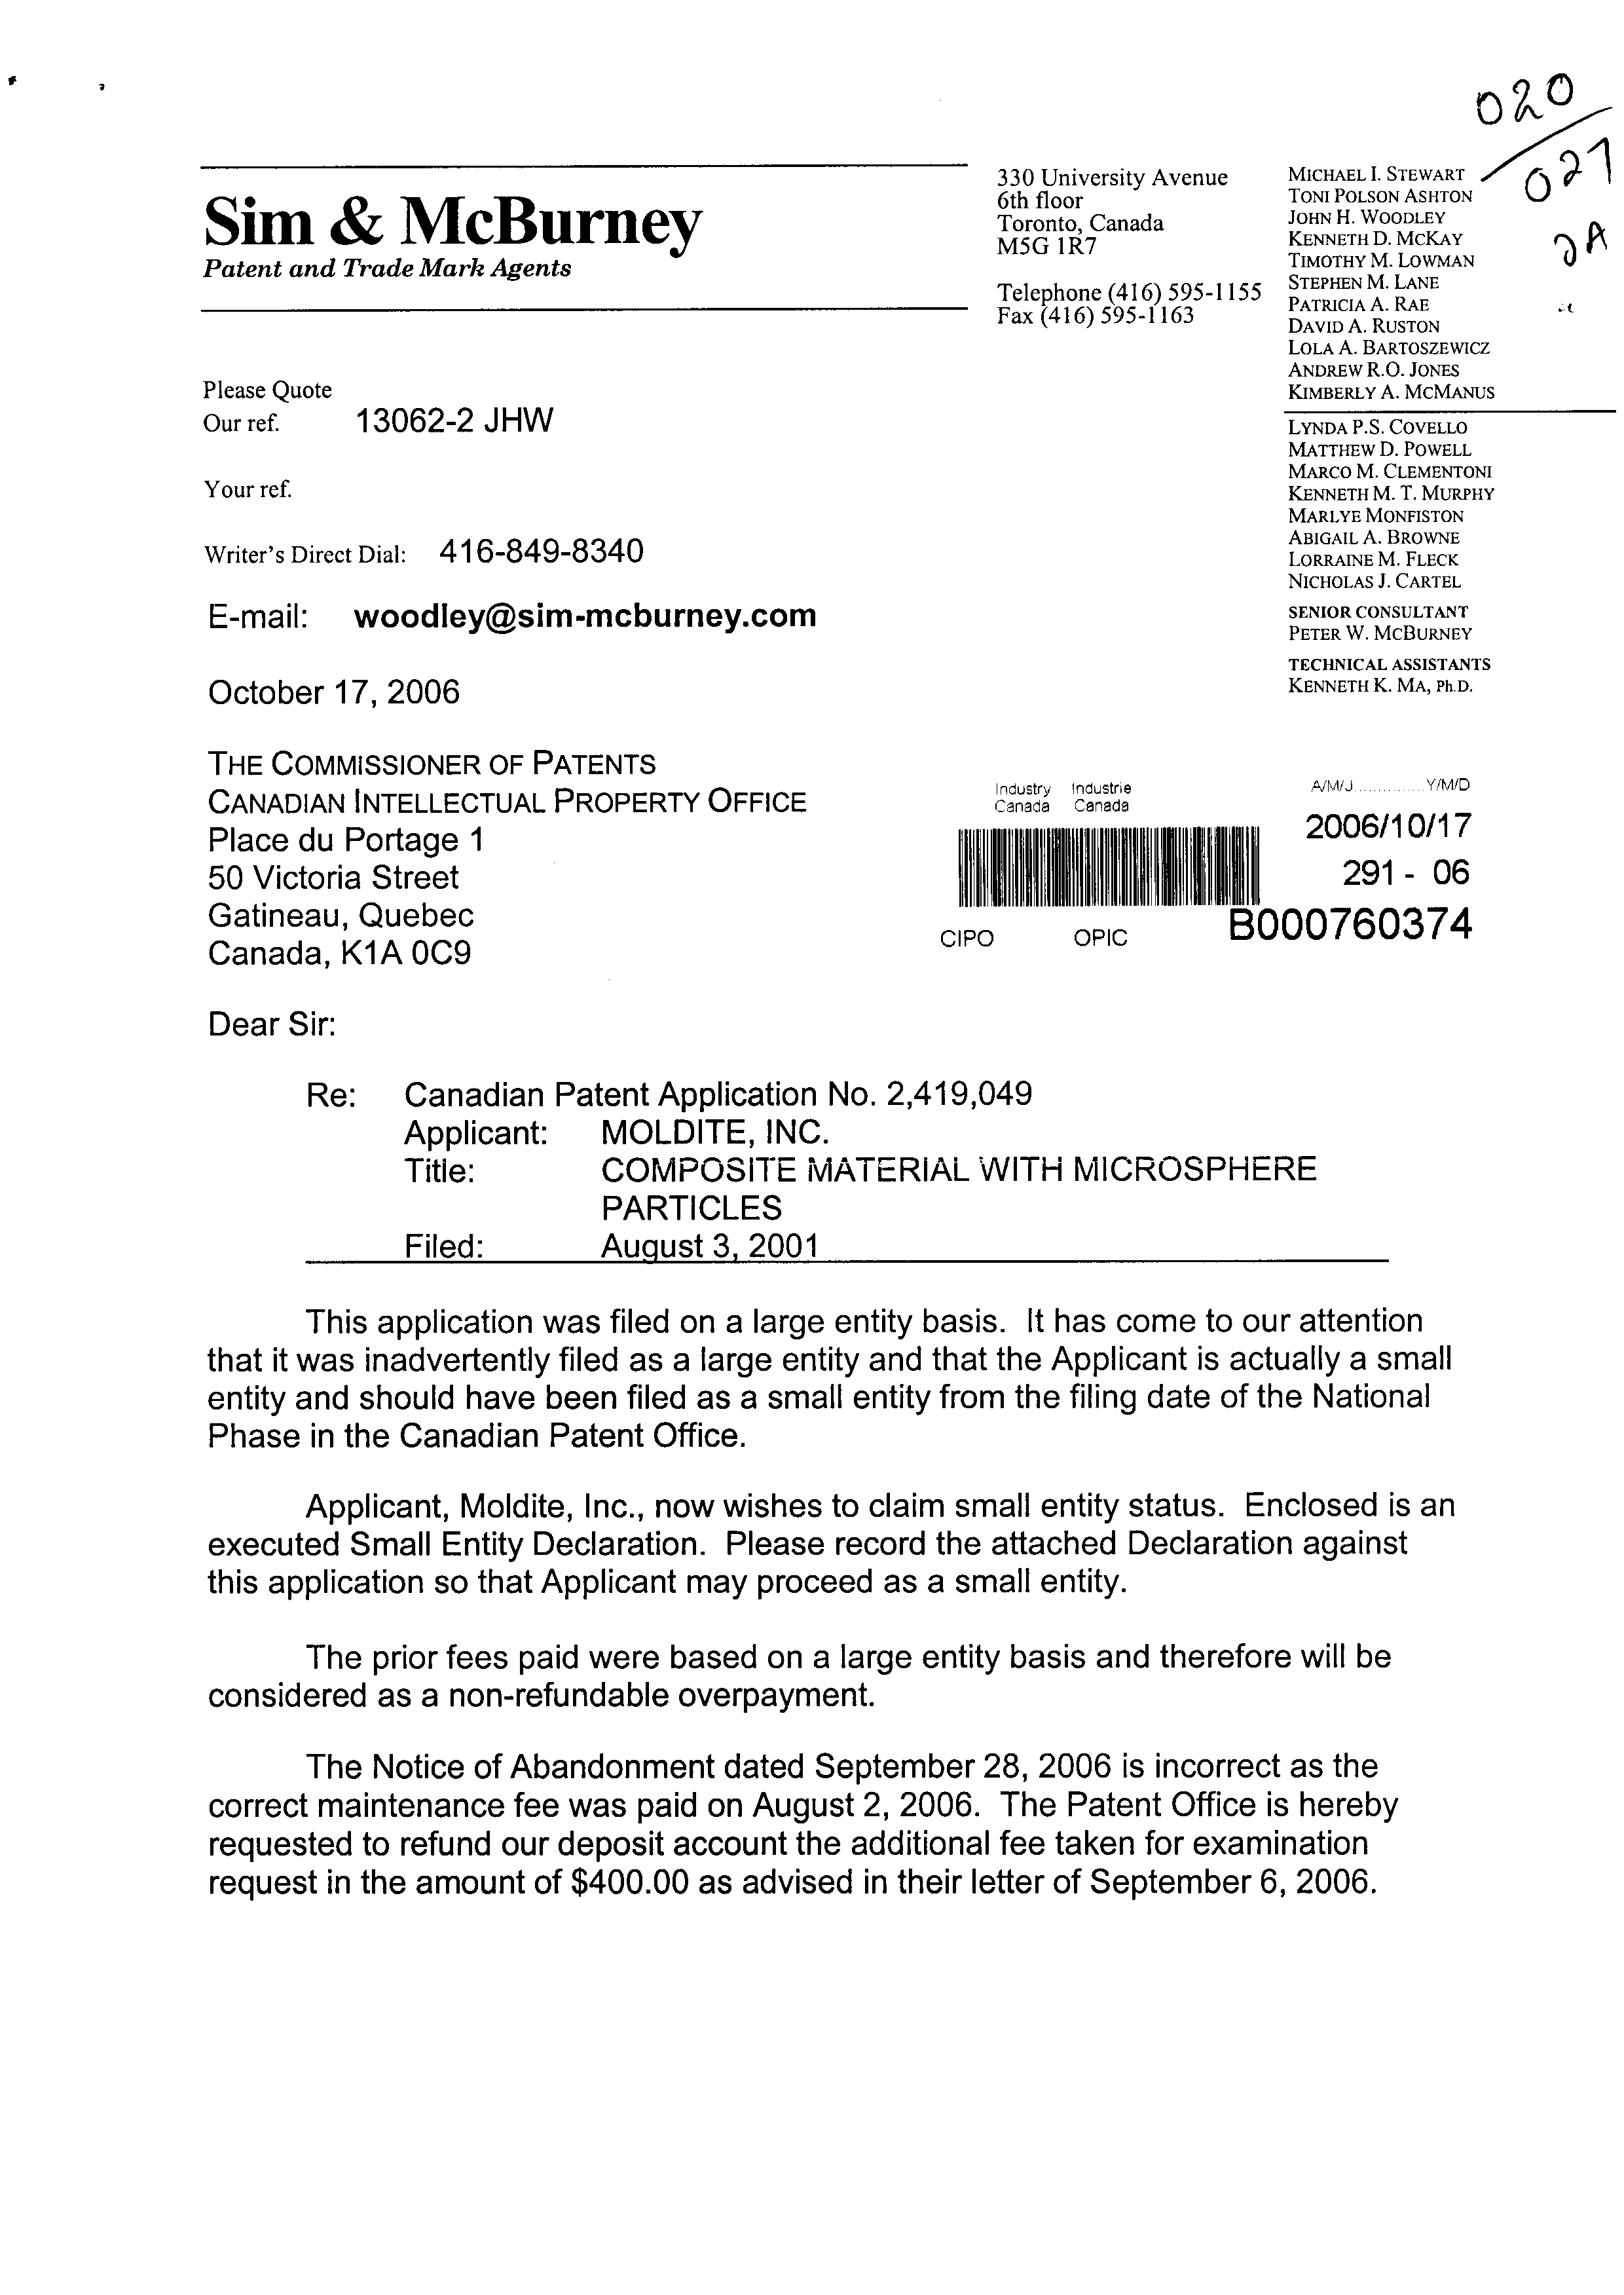 Canadian Patent Document 2419049. Correspondence 20061017. Image 1 of 3